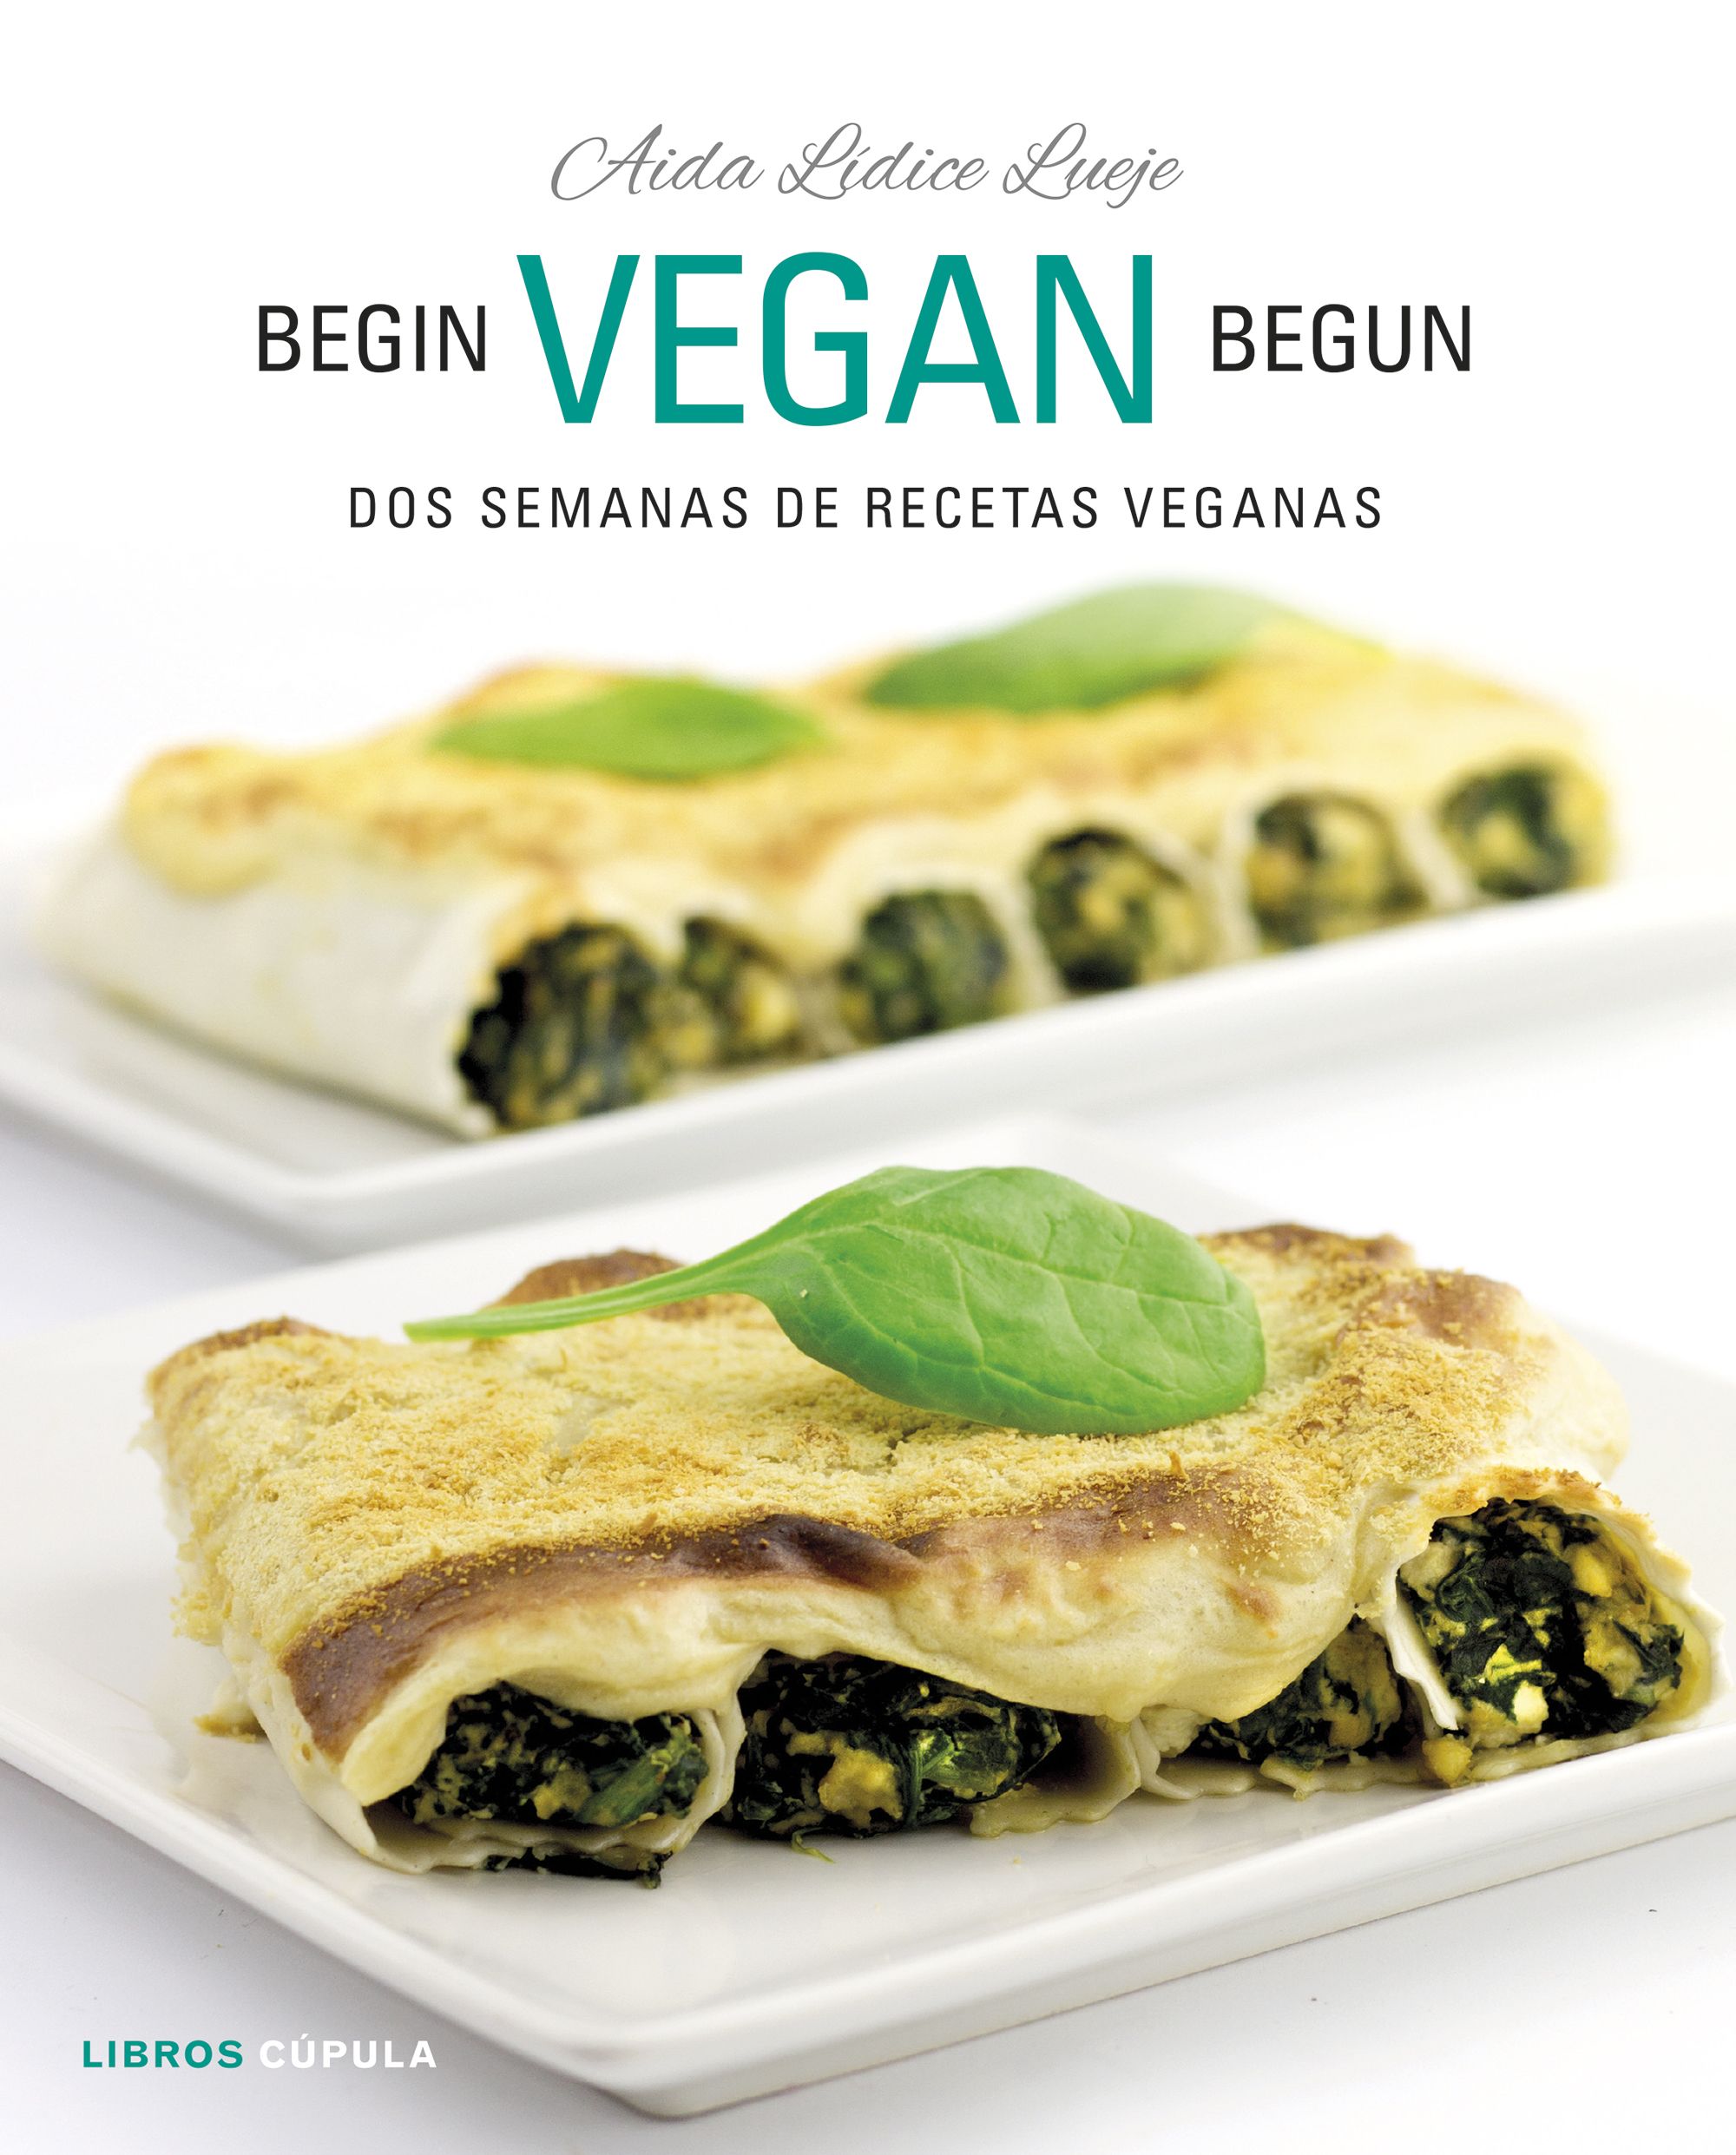 Begin Vegan Begun. Dos semanas de recetas veganas